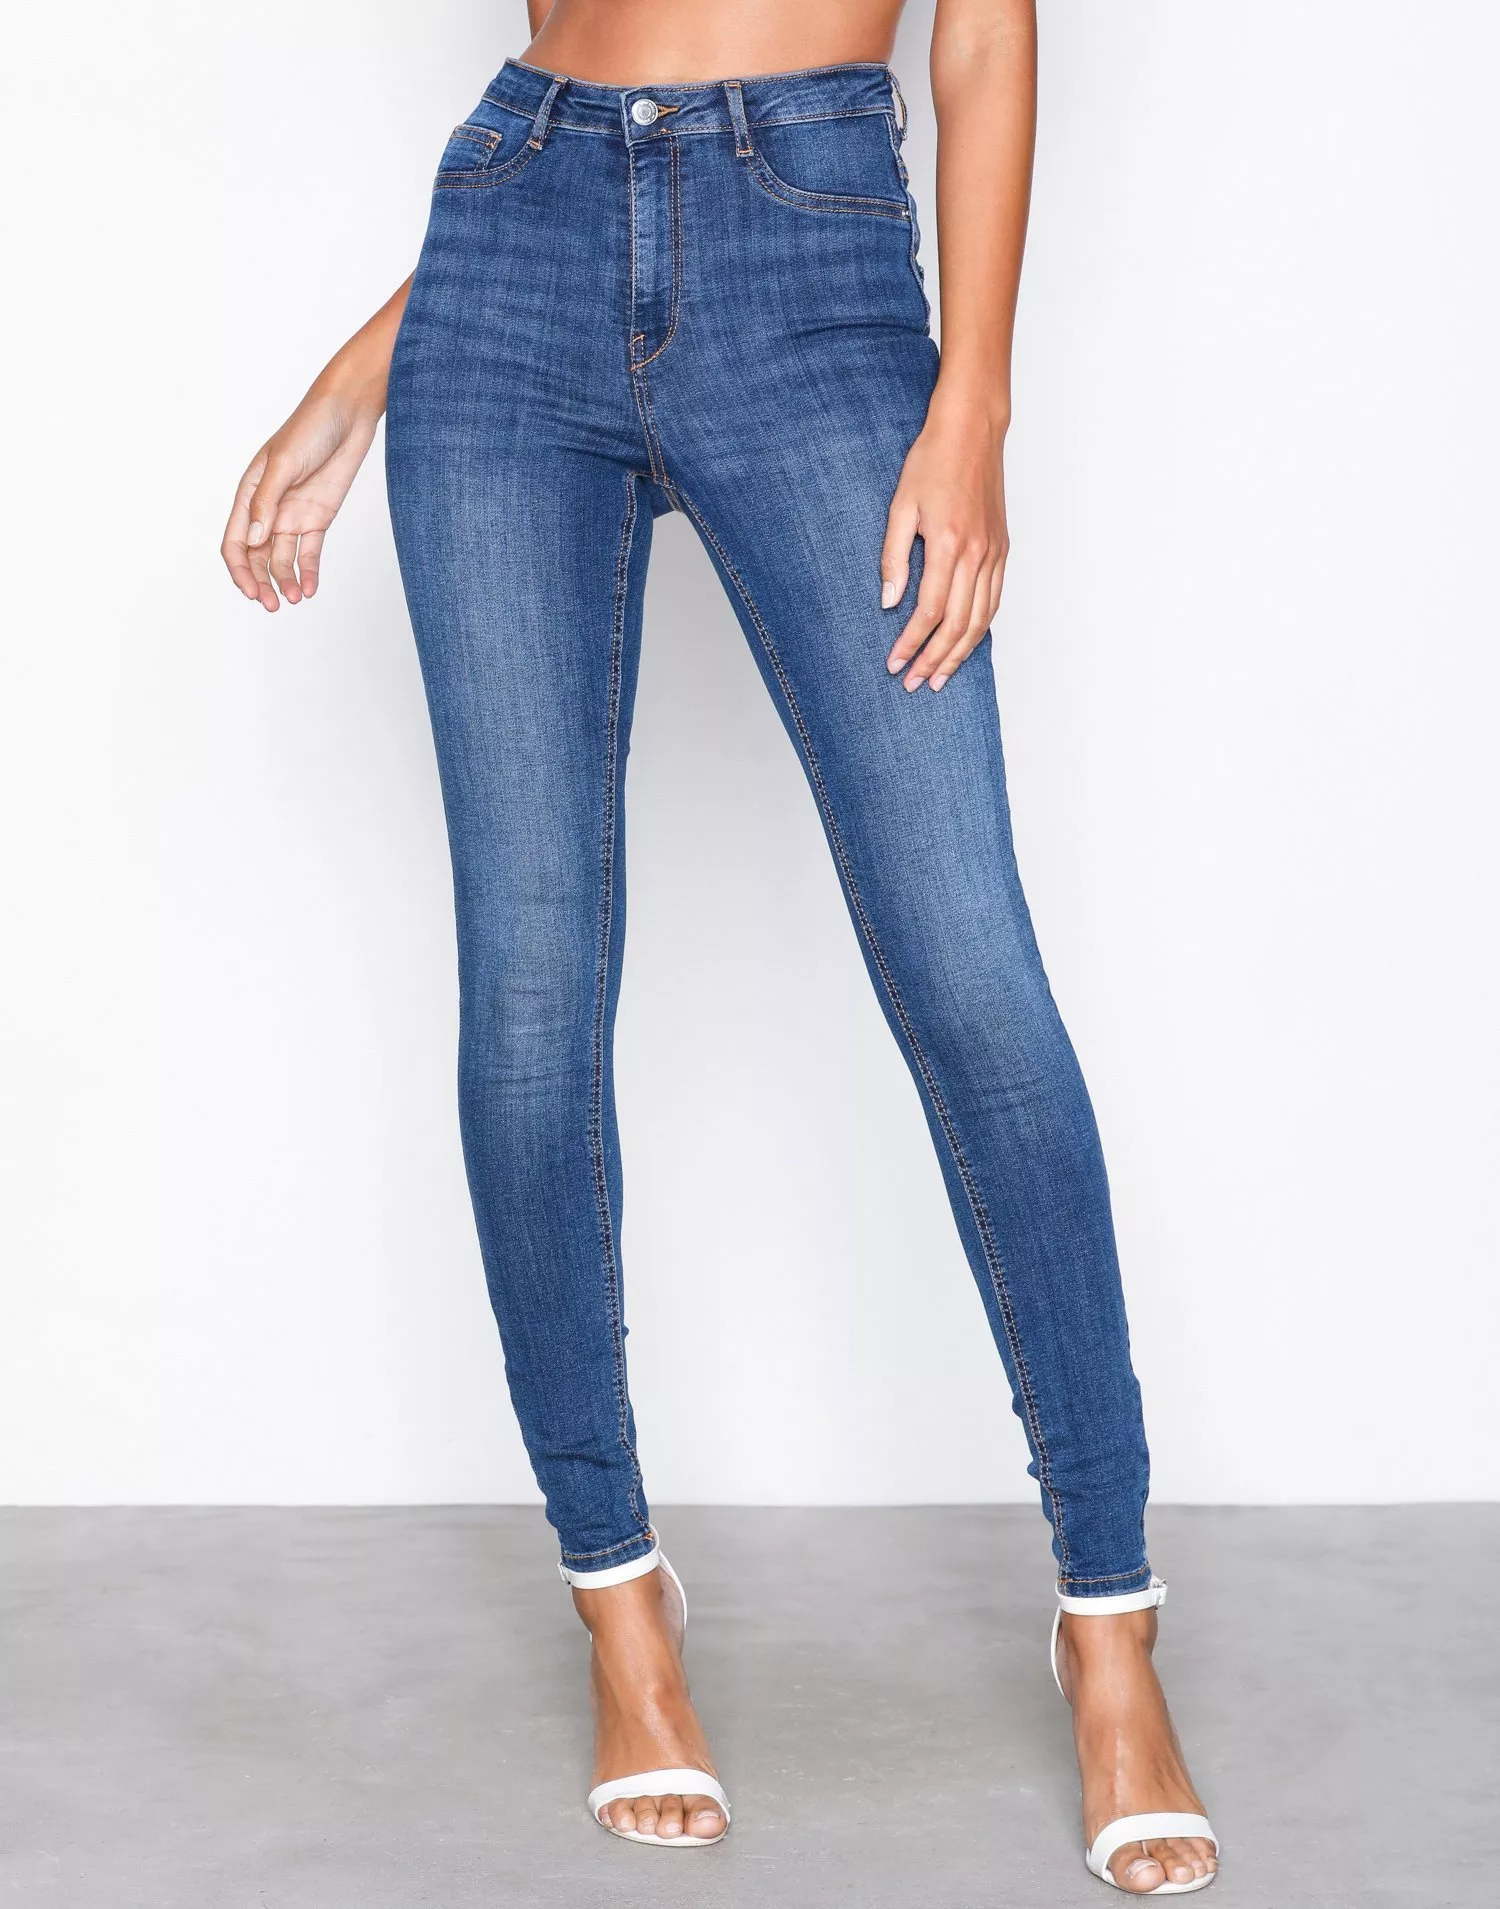 Buy Gina Tricot Molly High Waist Jeans - Dark Blue